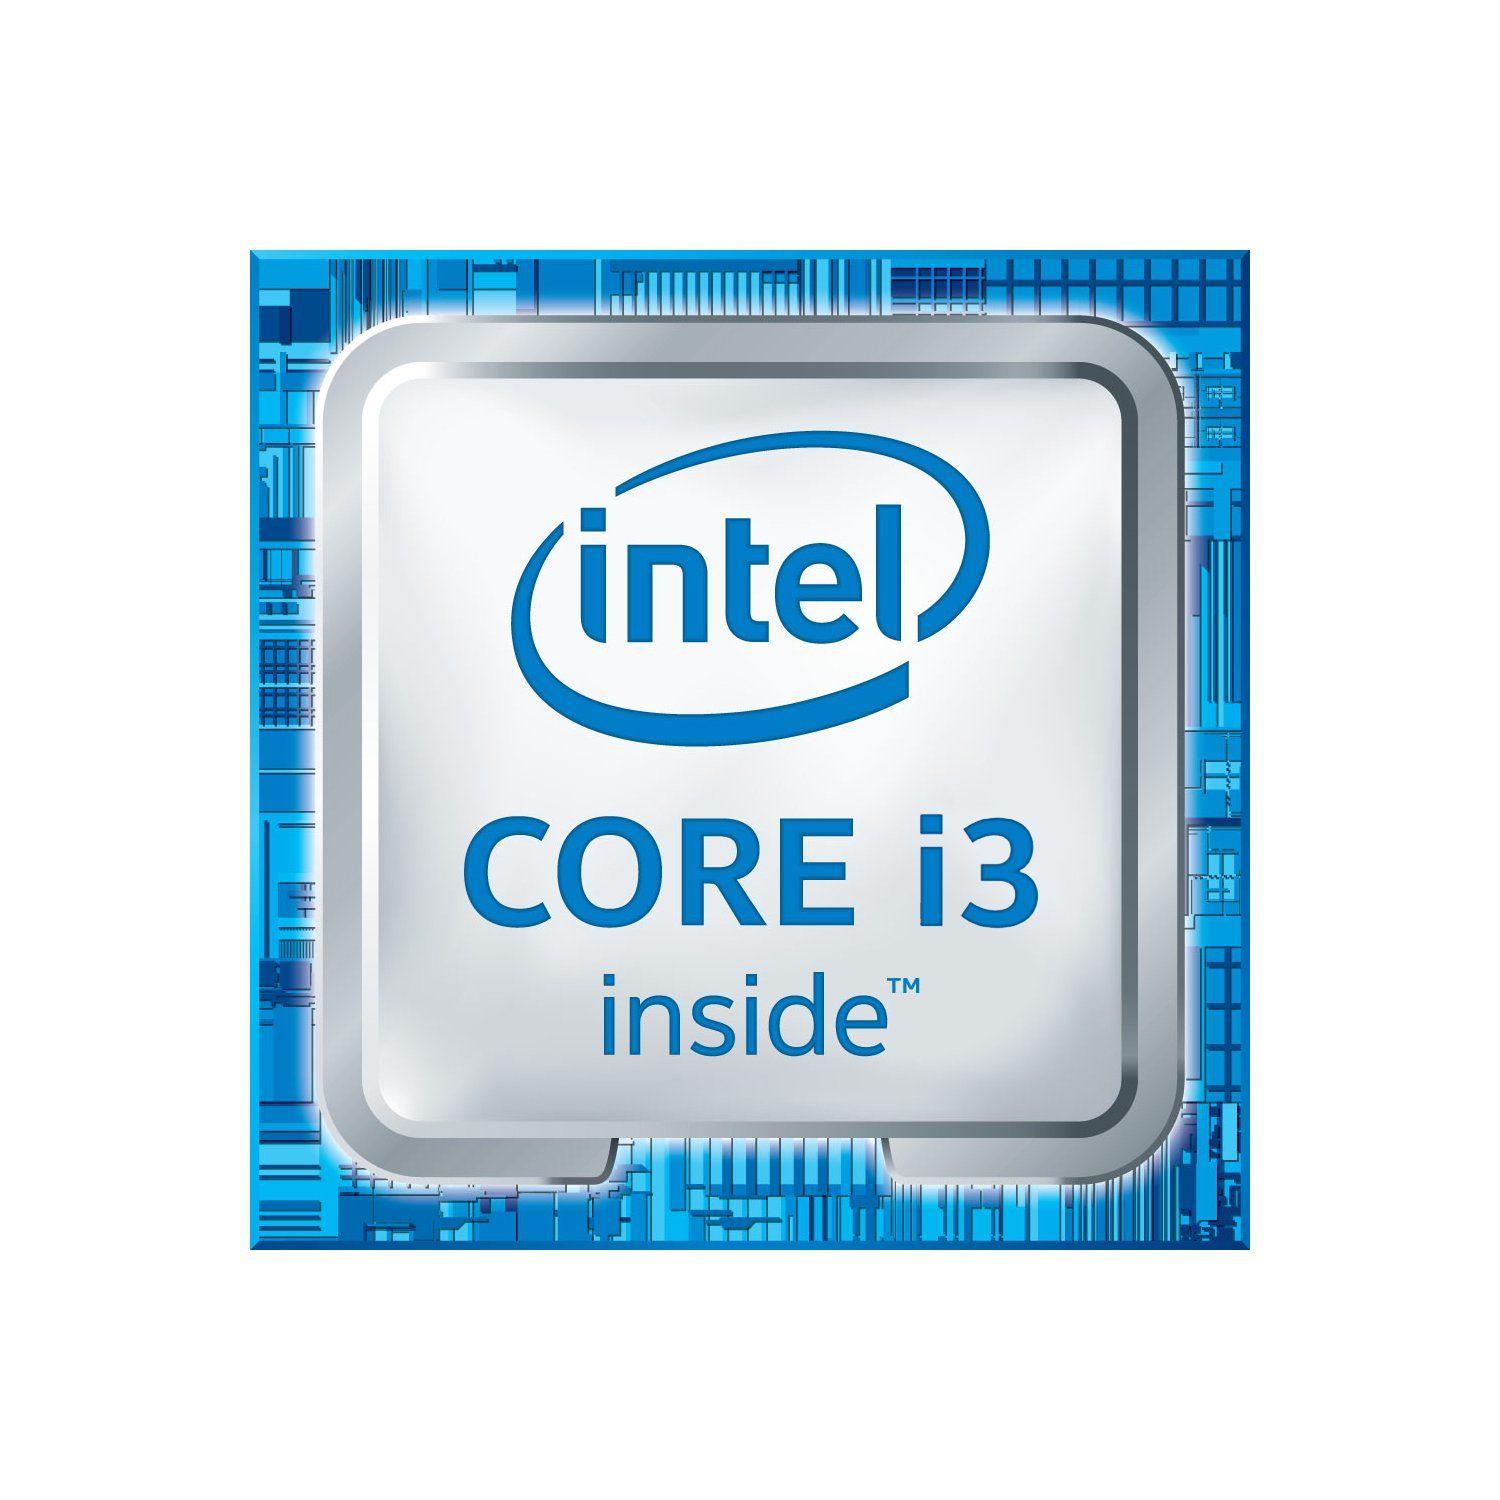 Original Intel Logo - 5x Original 6th Gen. Intel Core i3 Inside Sticker 18mm x